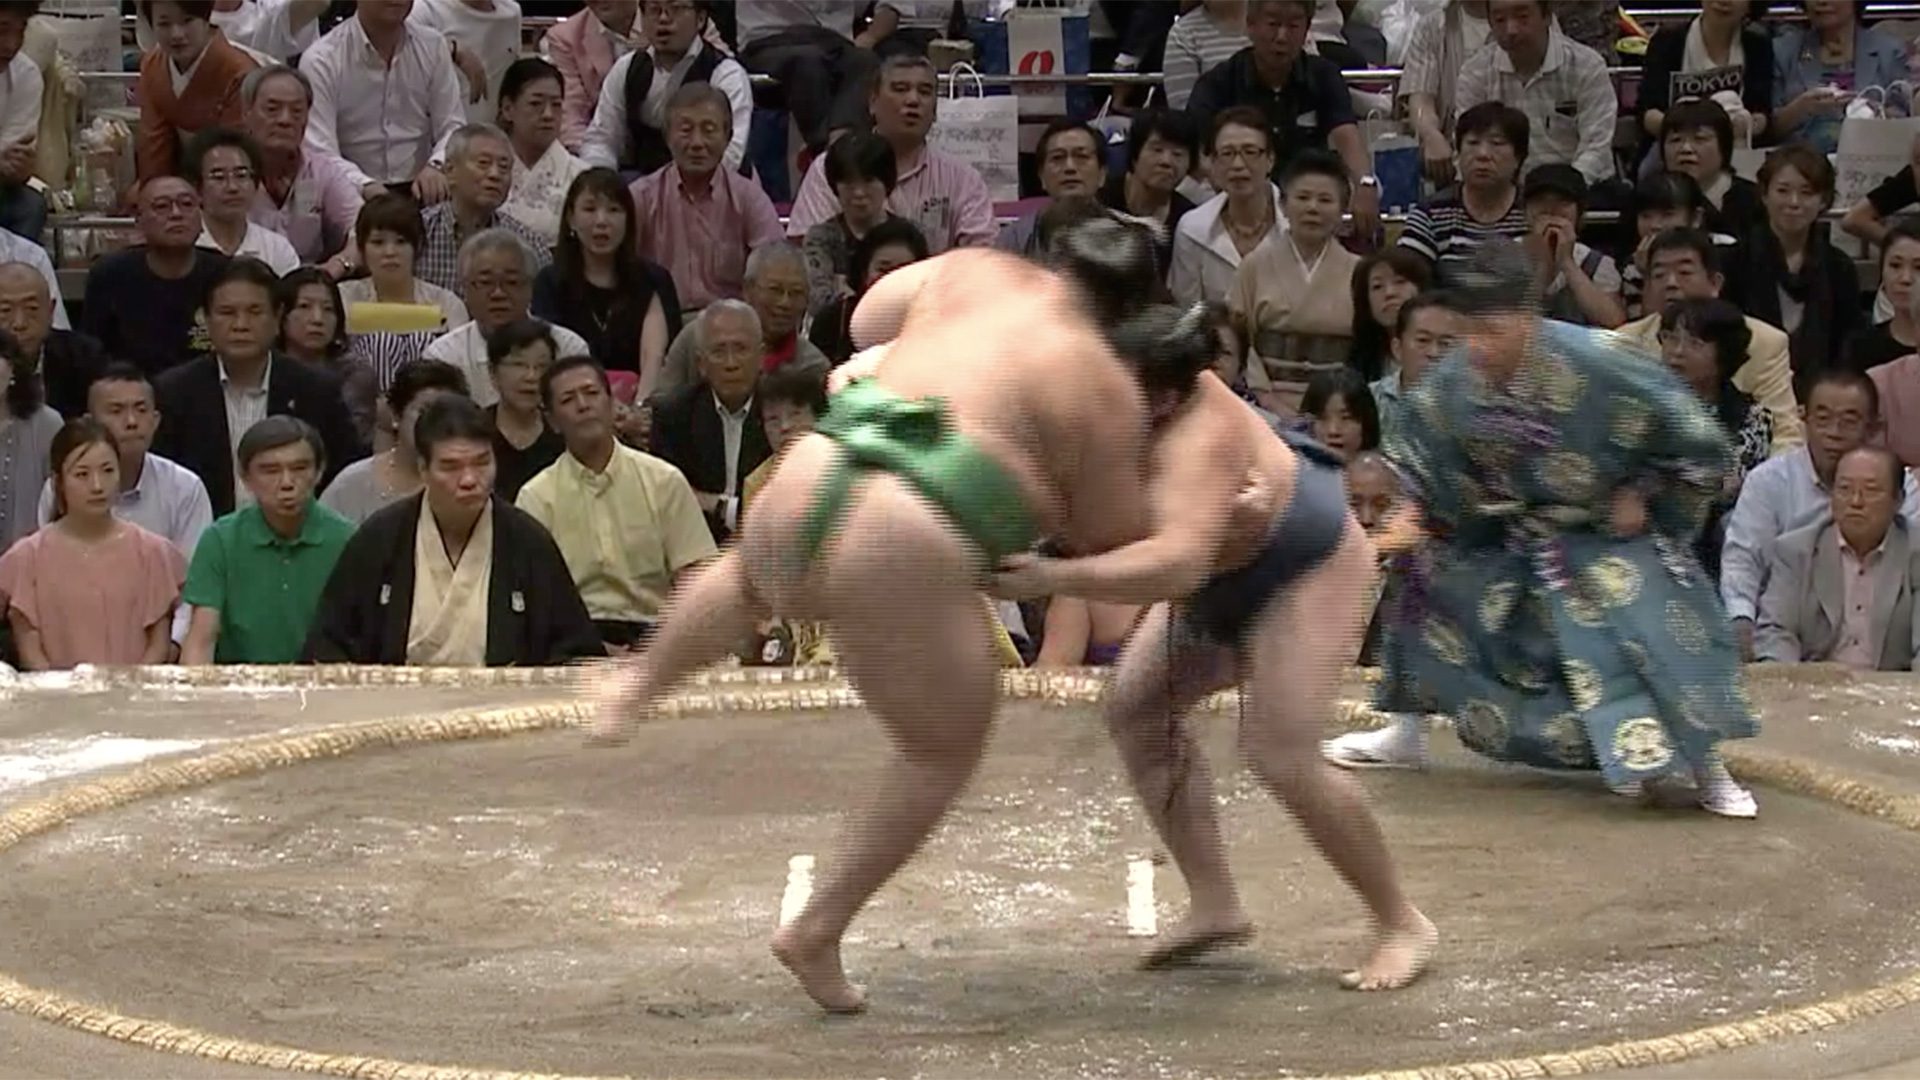 Uwatehineri / Twisting over arm throw